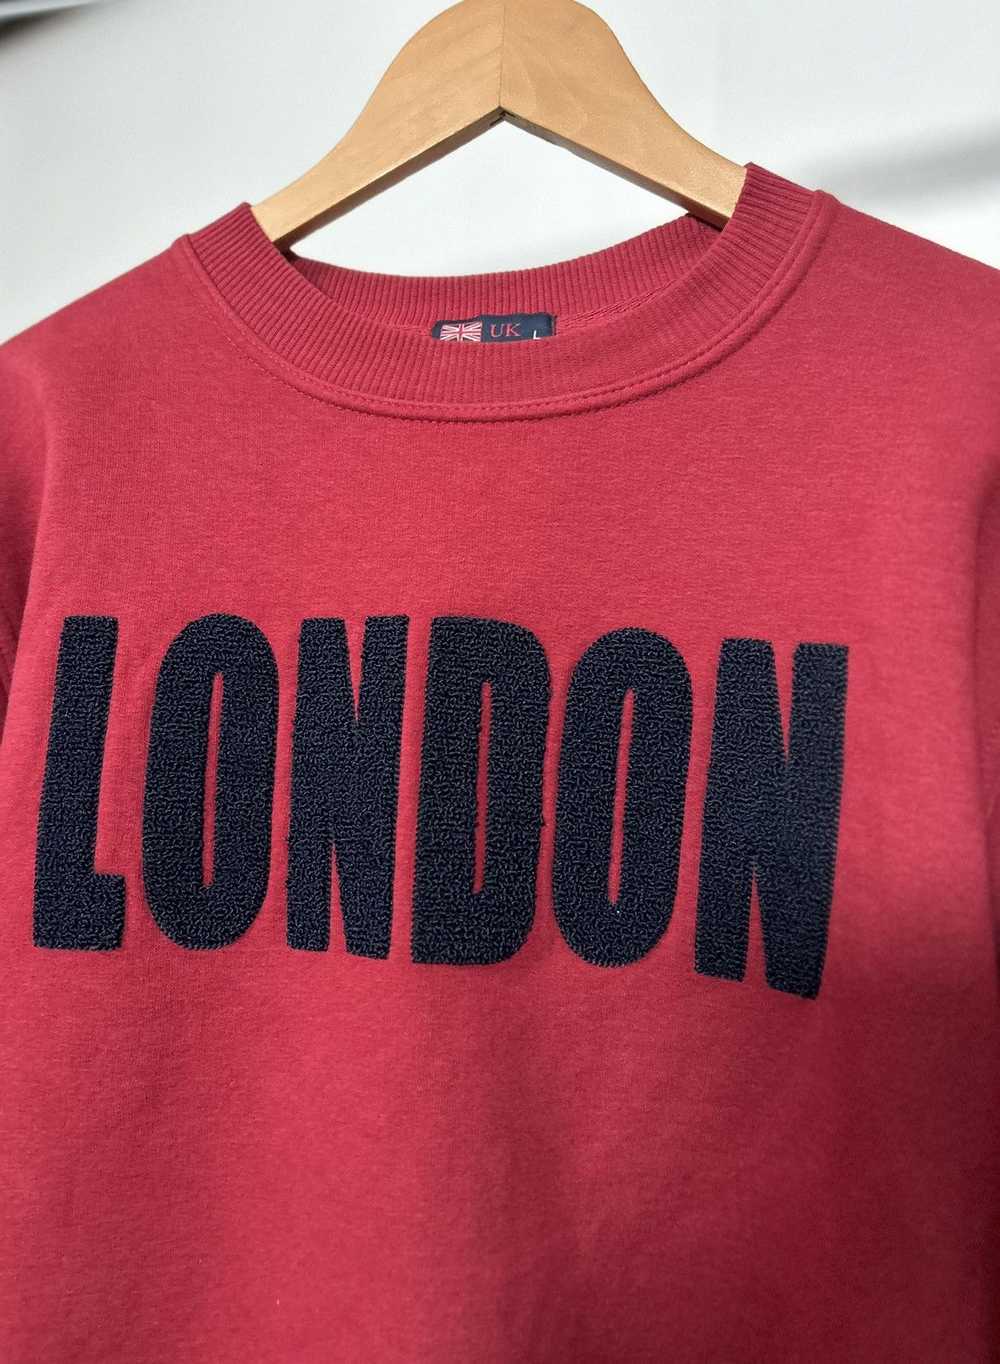 Streetwear UK London Crewneck Sweatshirt - image 3